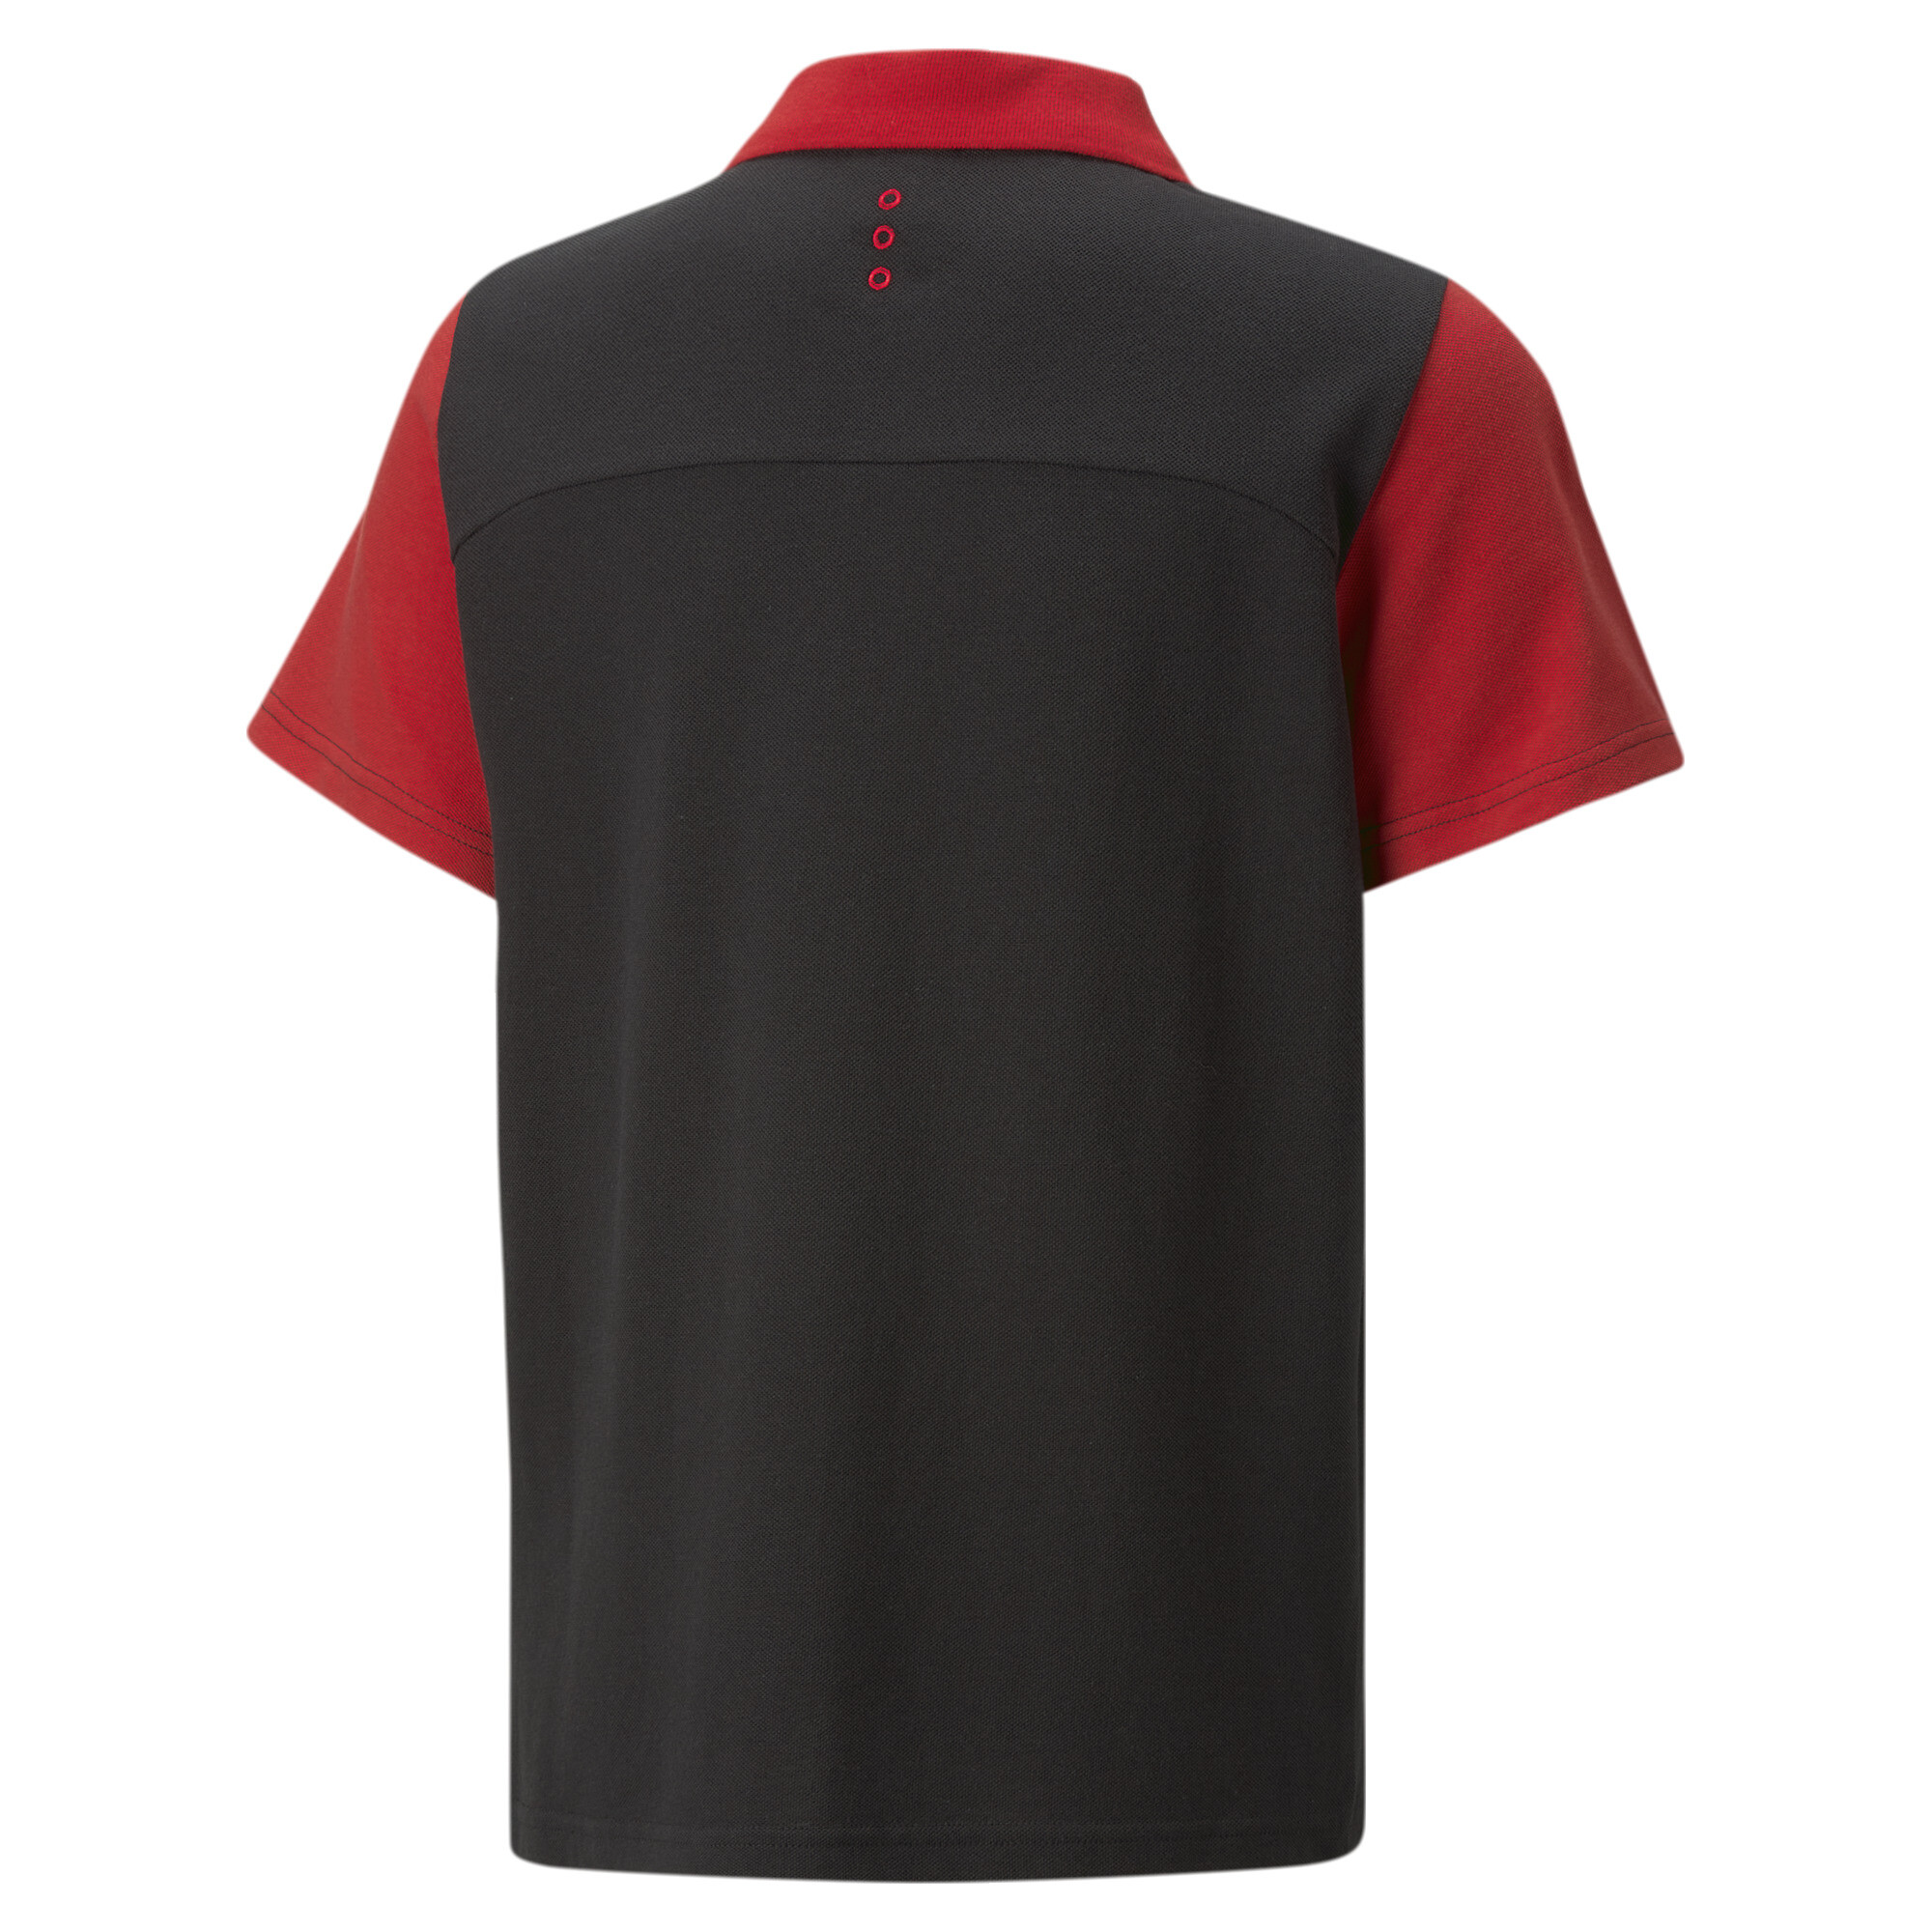 PUMA Scuderia Ferrari Polo Shirt In Black, Size 7-8 Youth